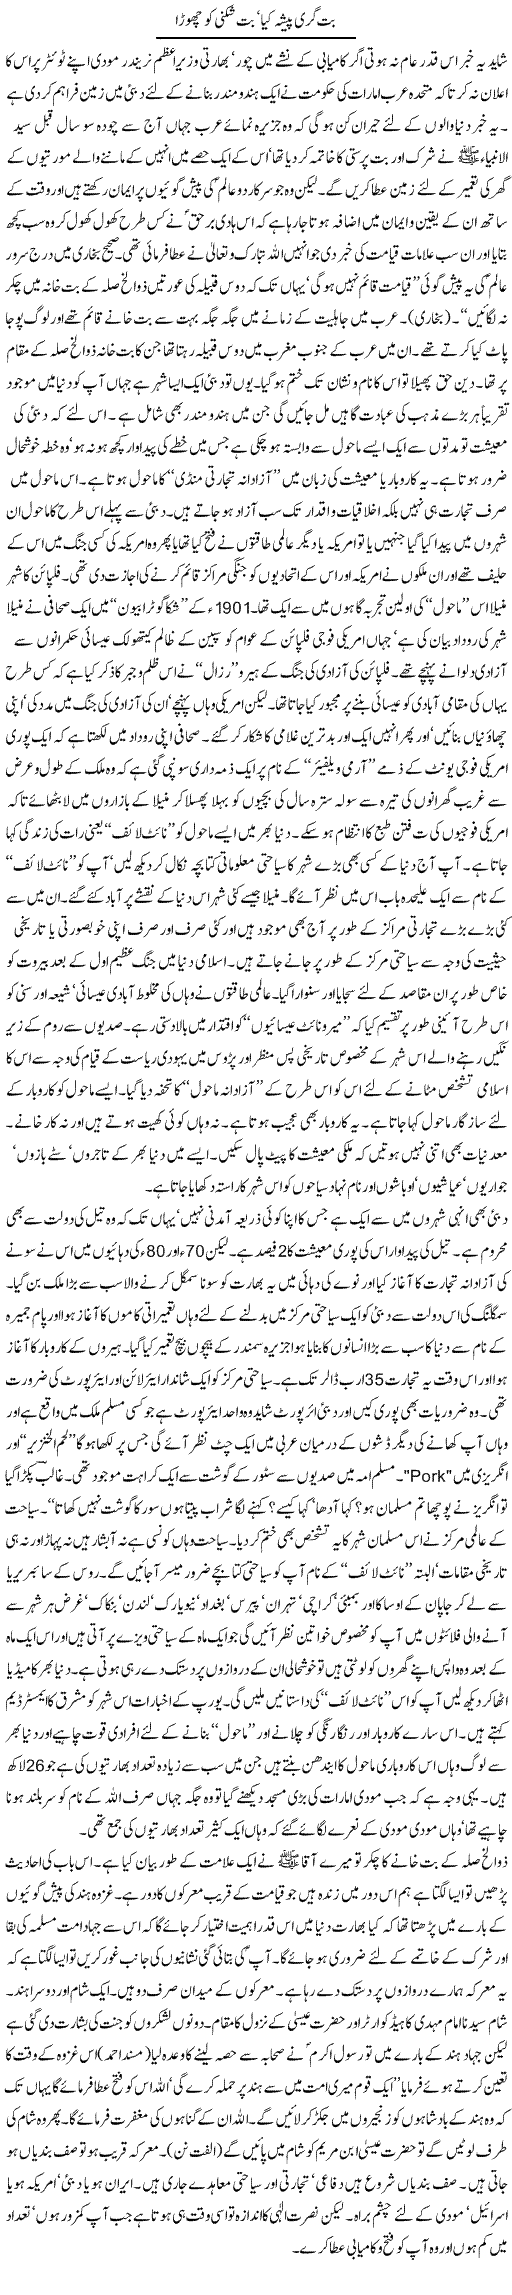 Butgari Pesha Kia, Butshikni Ko Chora | Orya Maqbool Jan | Daily Urdu Columns